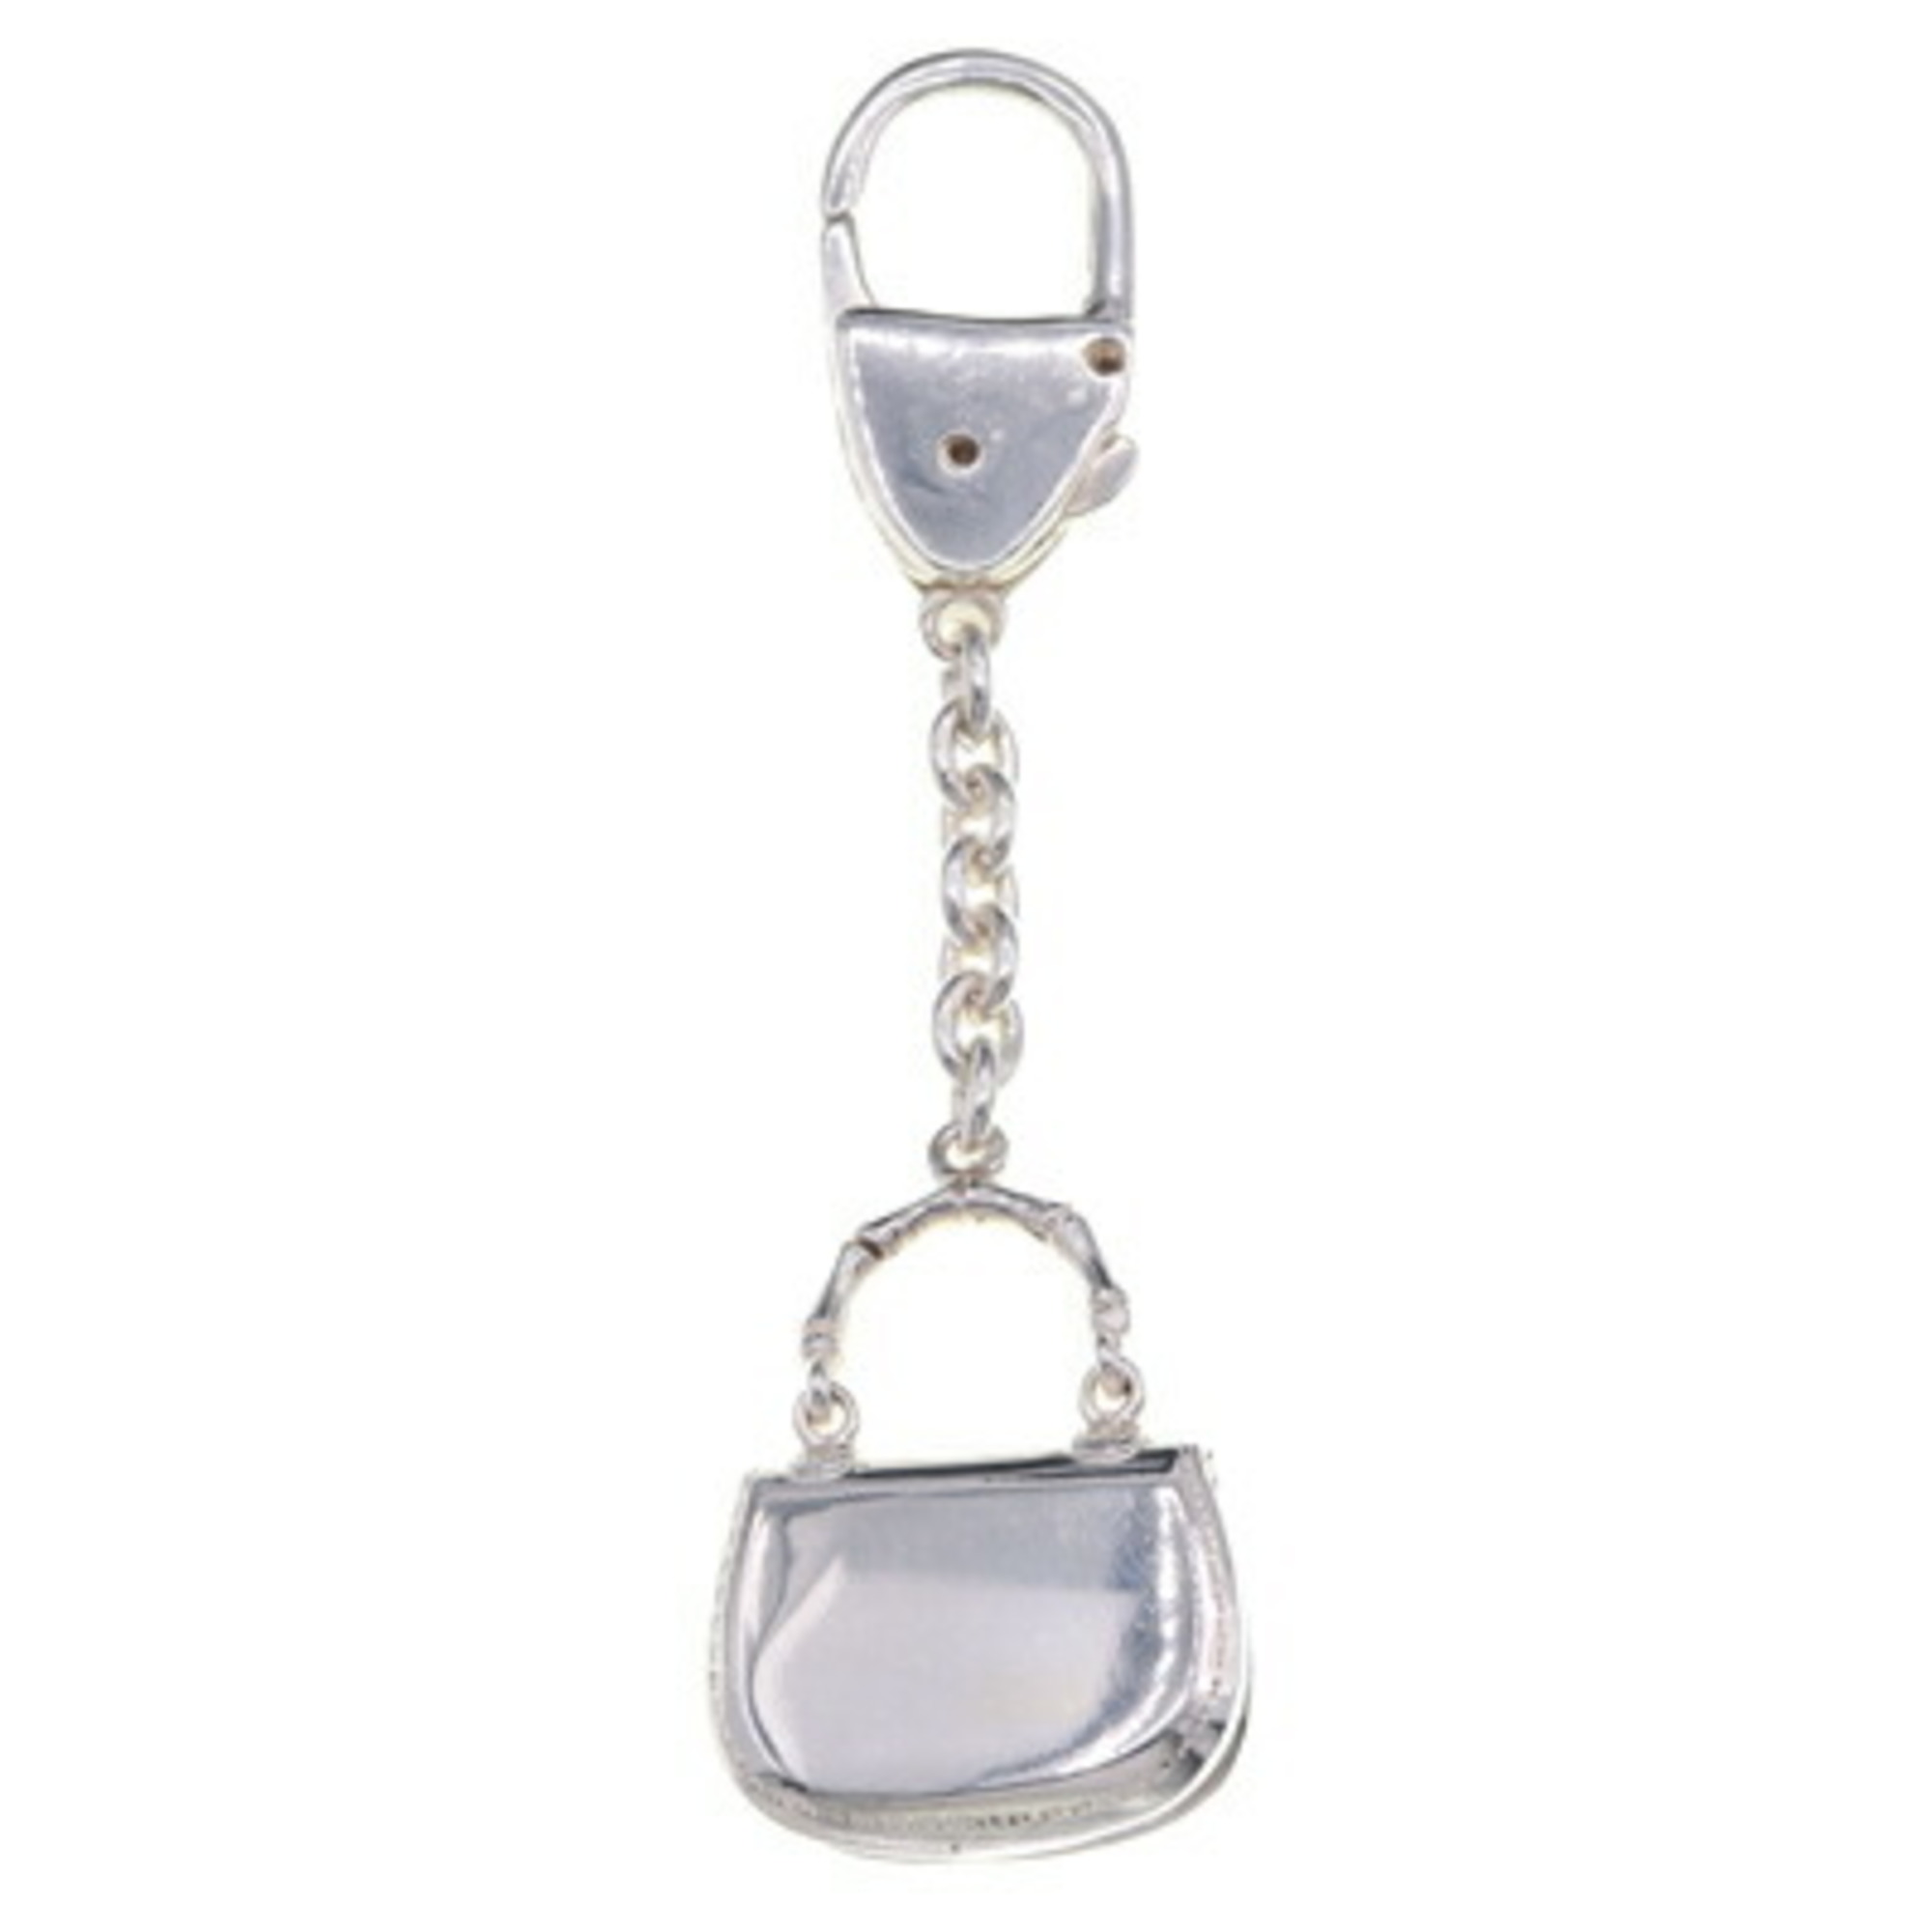 Gucci key holder bag motif silver metal bamboo ring charm ladies GUCCI